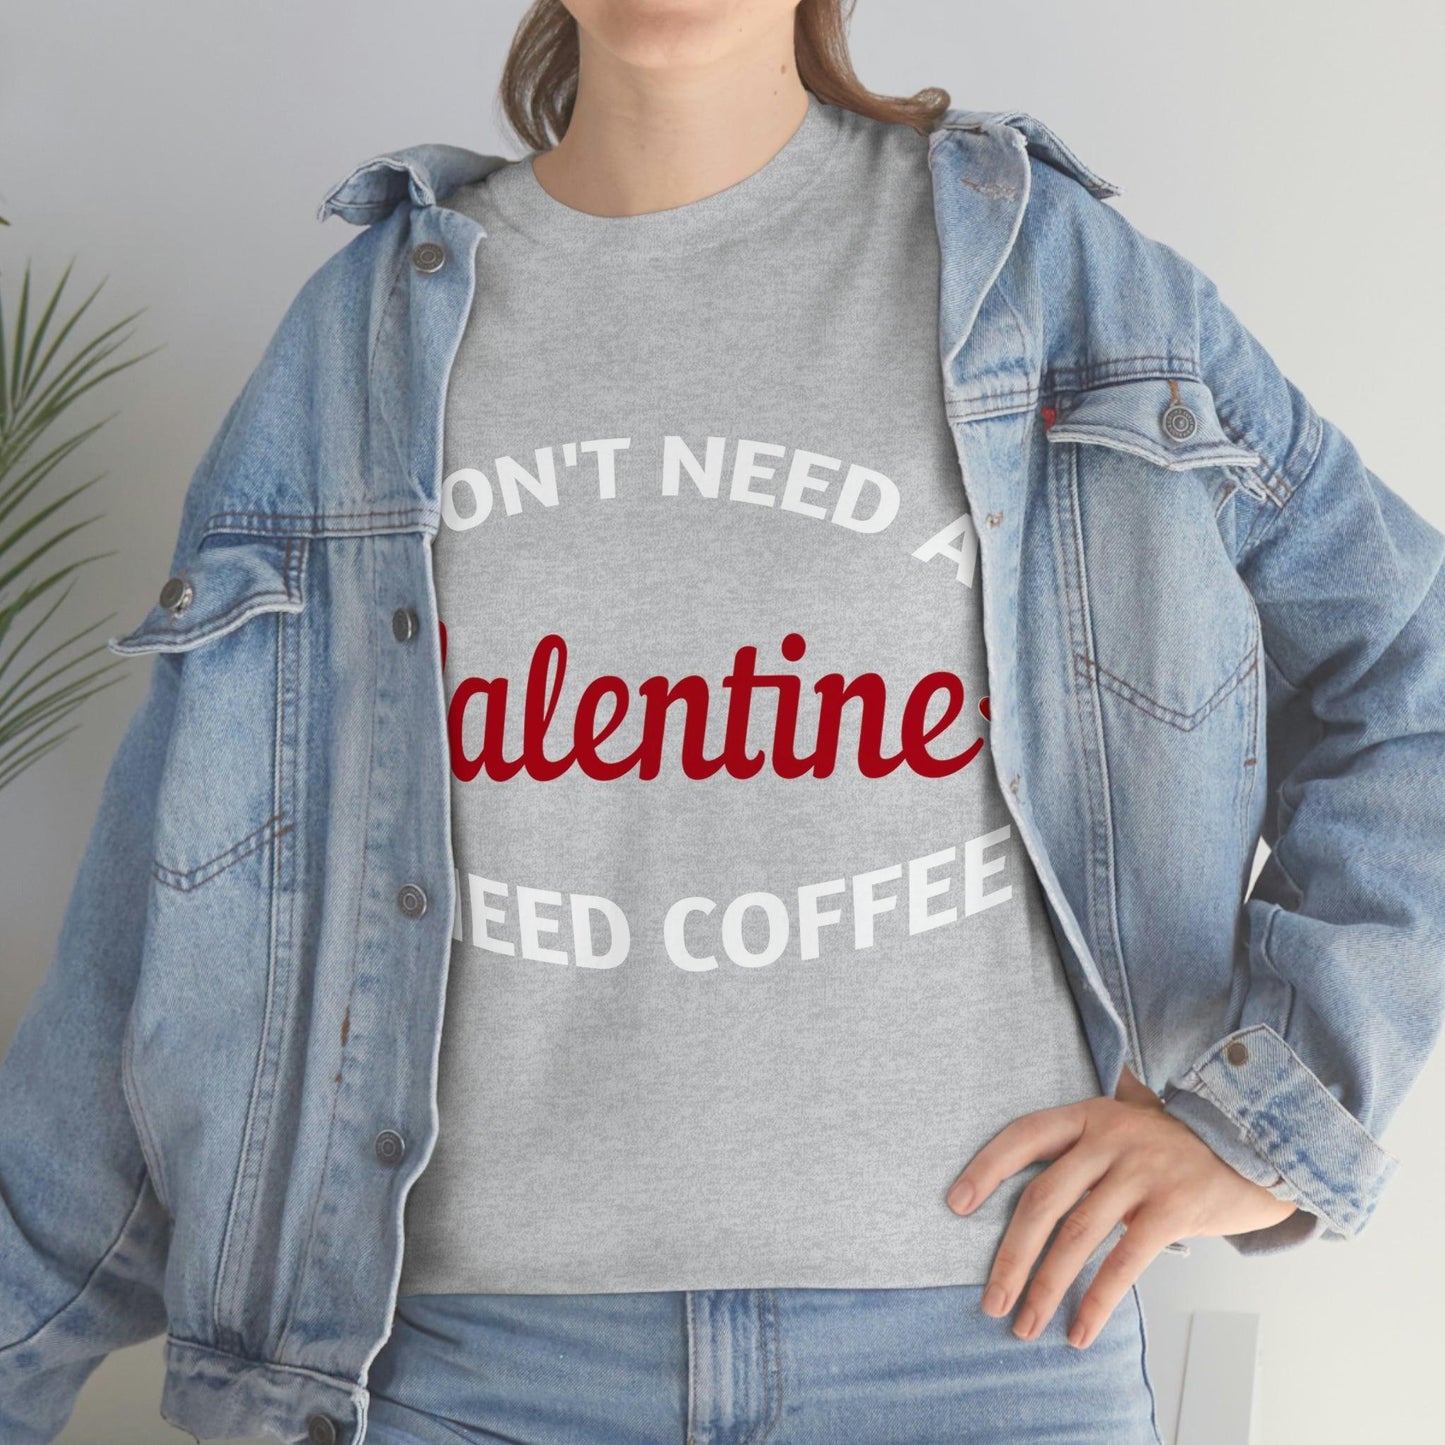 I don't need a Valentine I need Coffee